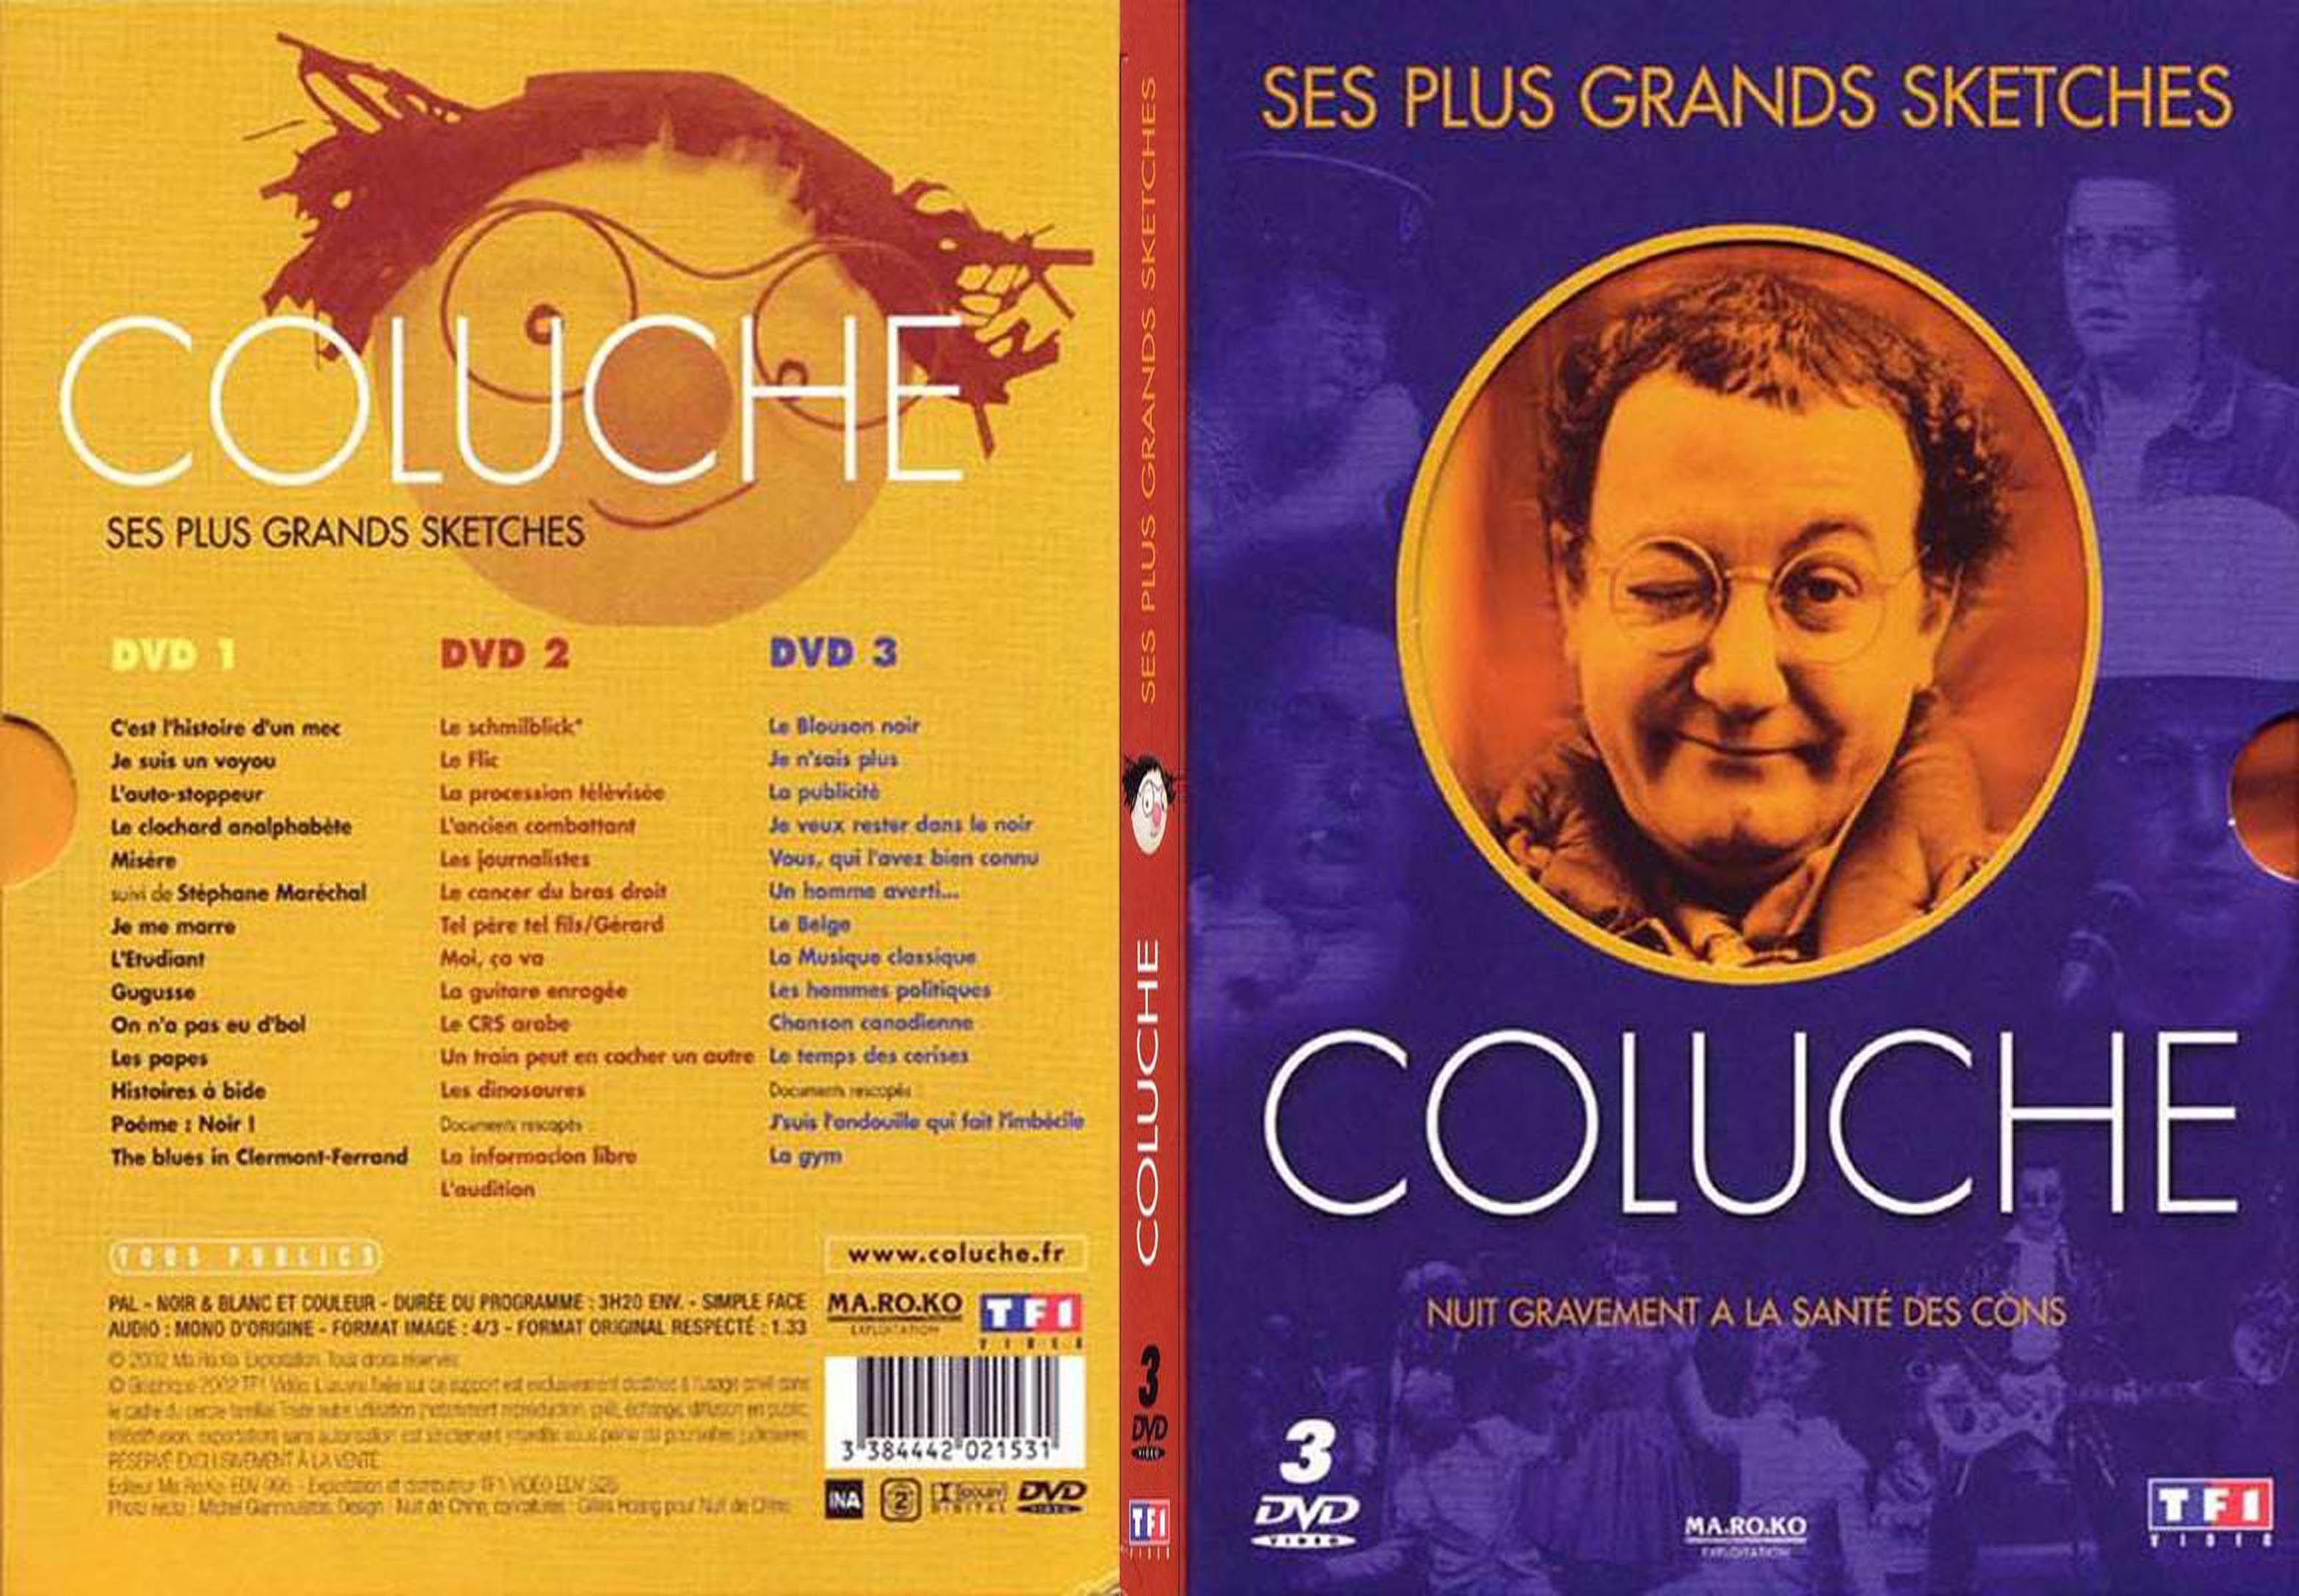 Jaquette DVD Coluche ses plus grands sketches - SLIM